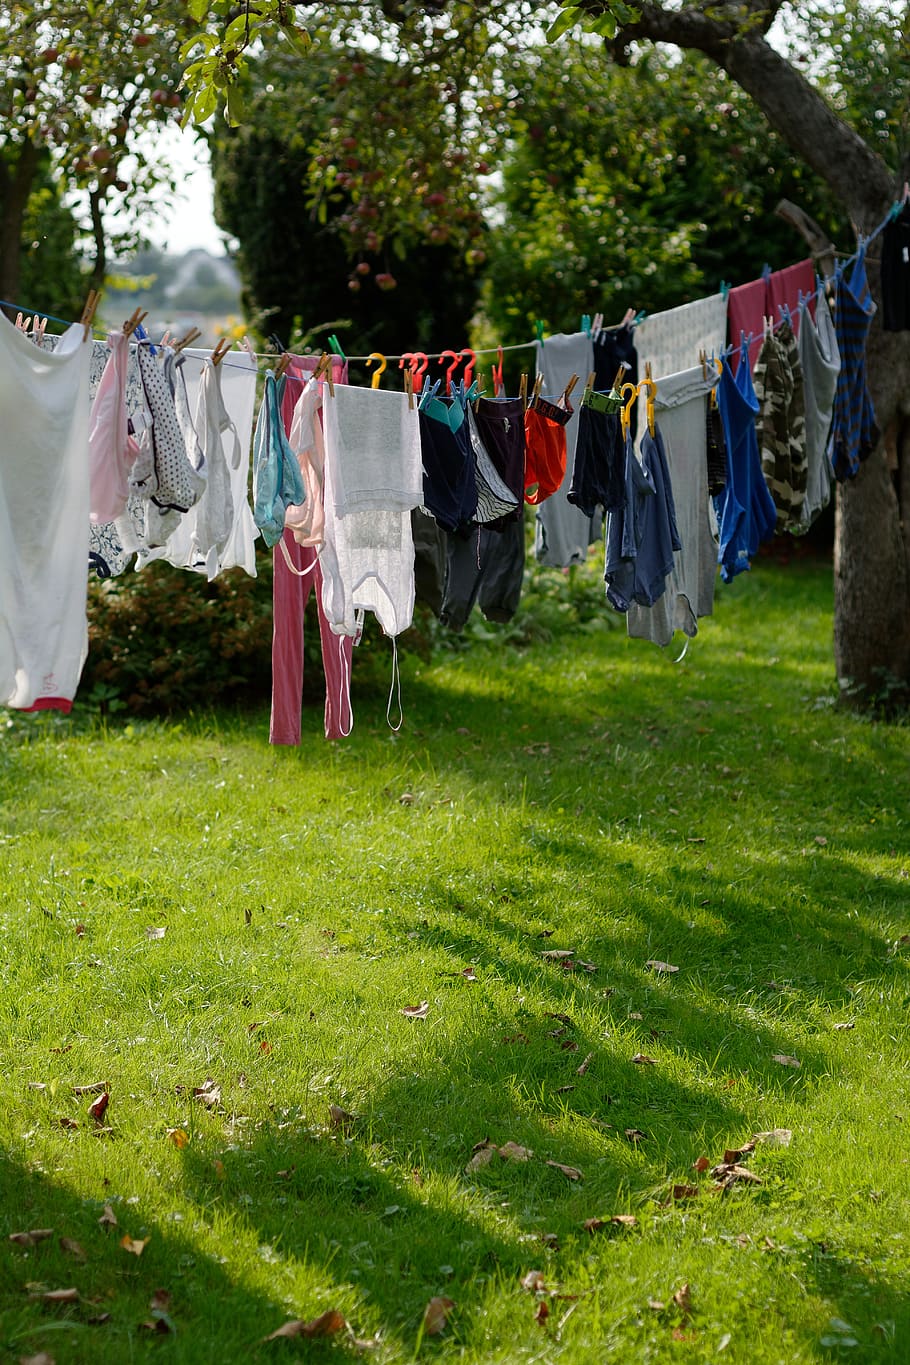 wash, dry, hang, drying, string, shadow, shadows, hanging, clothing, laundry